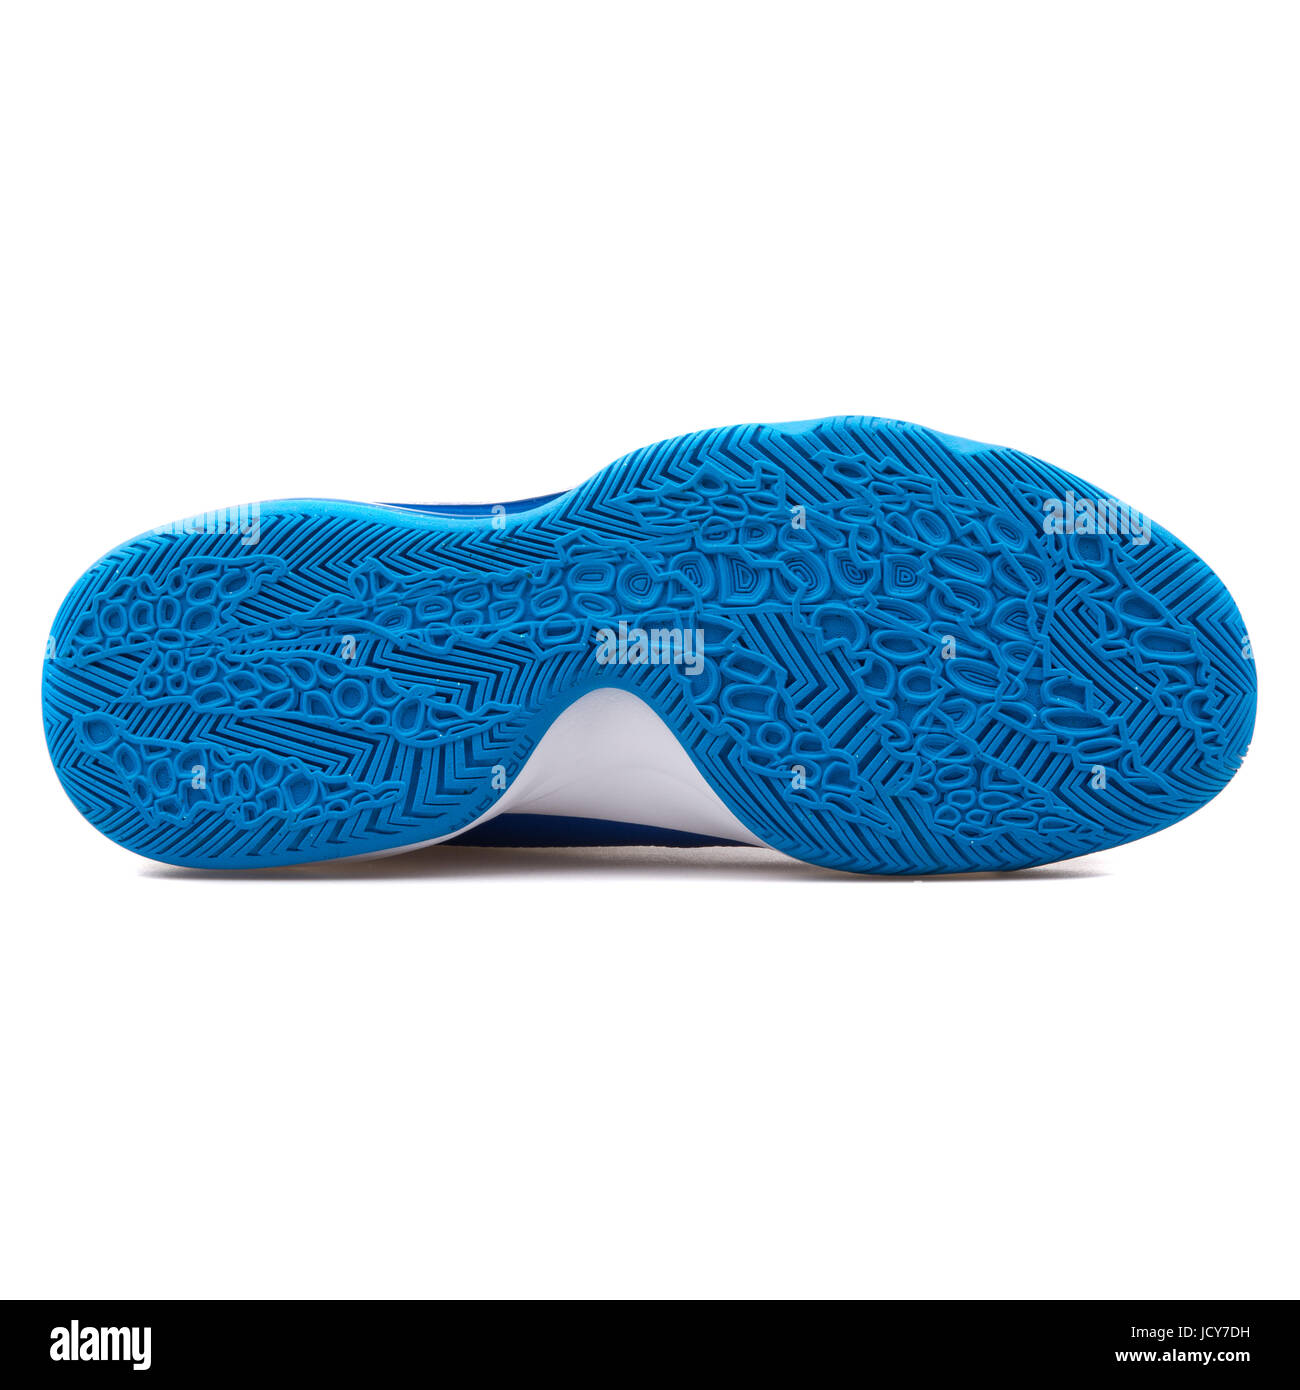 Nike Air Max Audacity TB blu e bianco Unisex scarpe da basket - 749166-403  Foto stock - Alamy